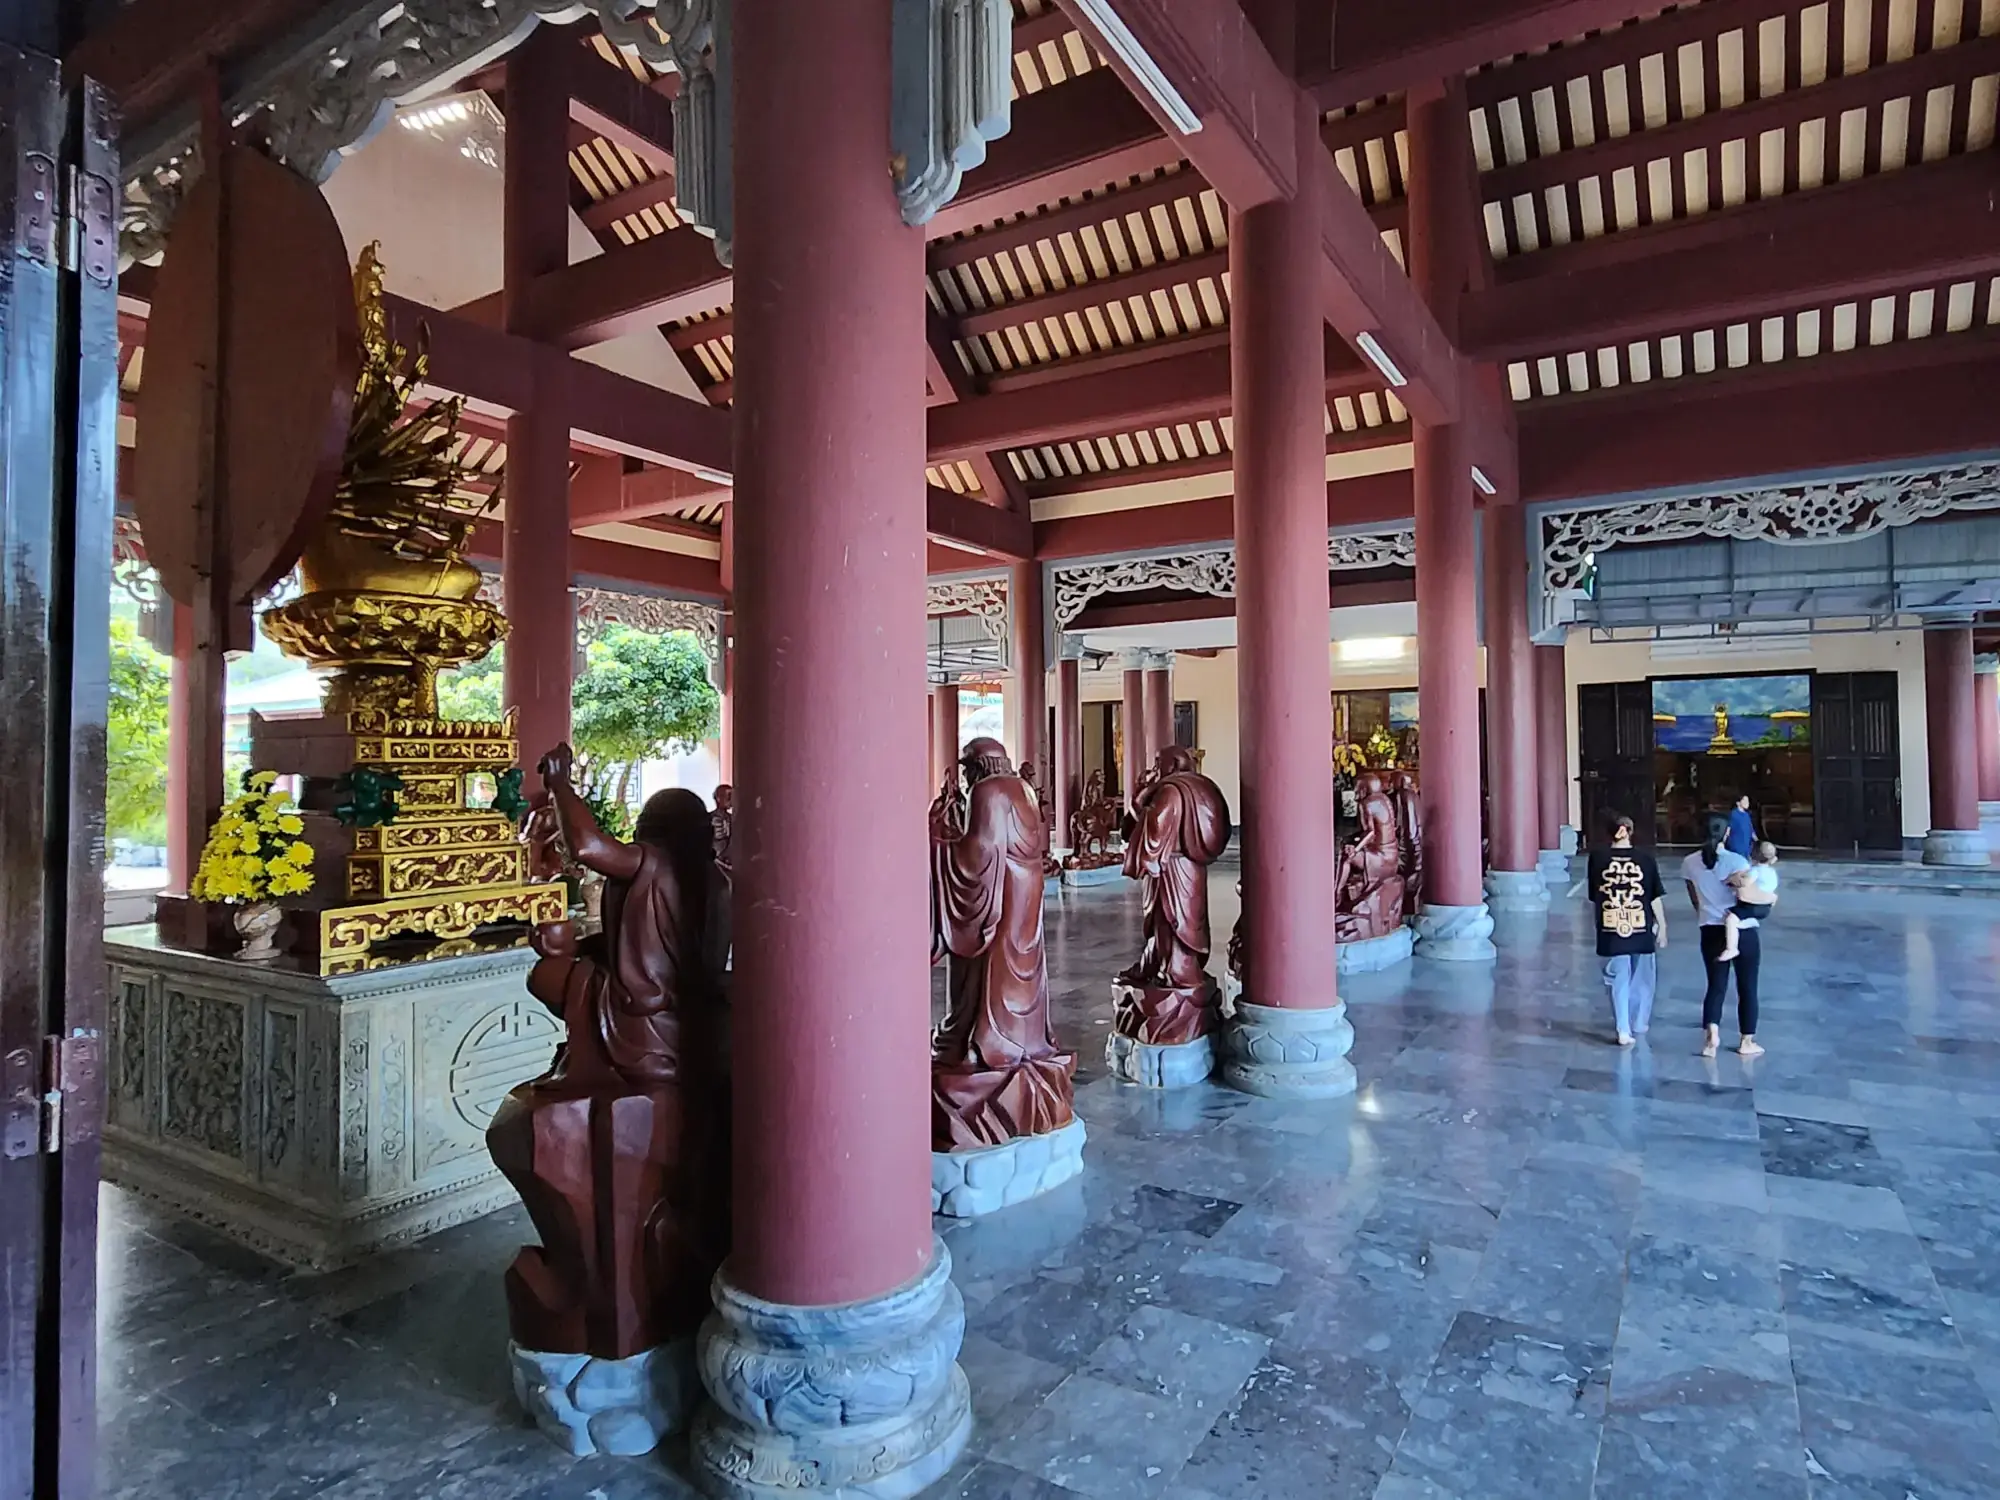 Linh Ung Pagoda - Main hall